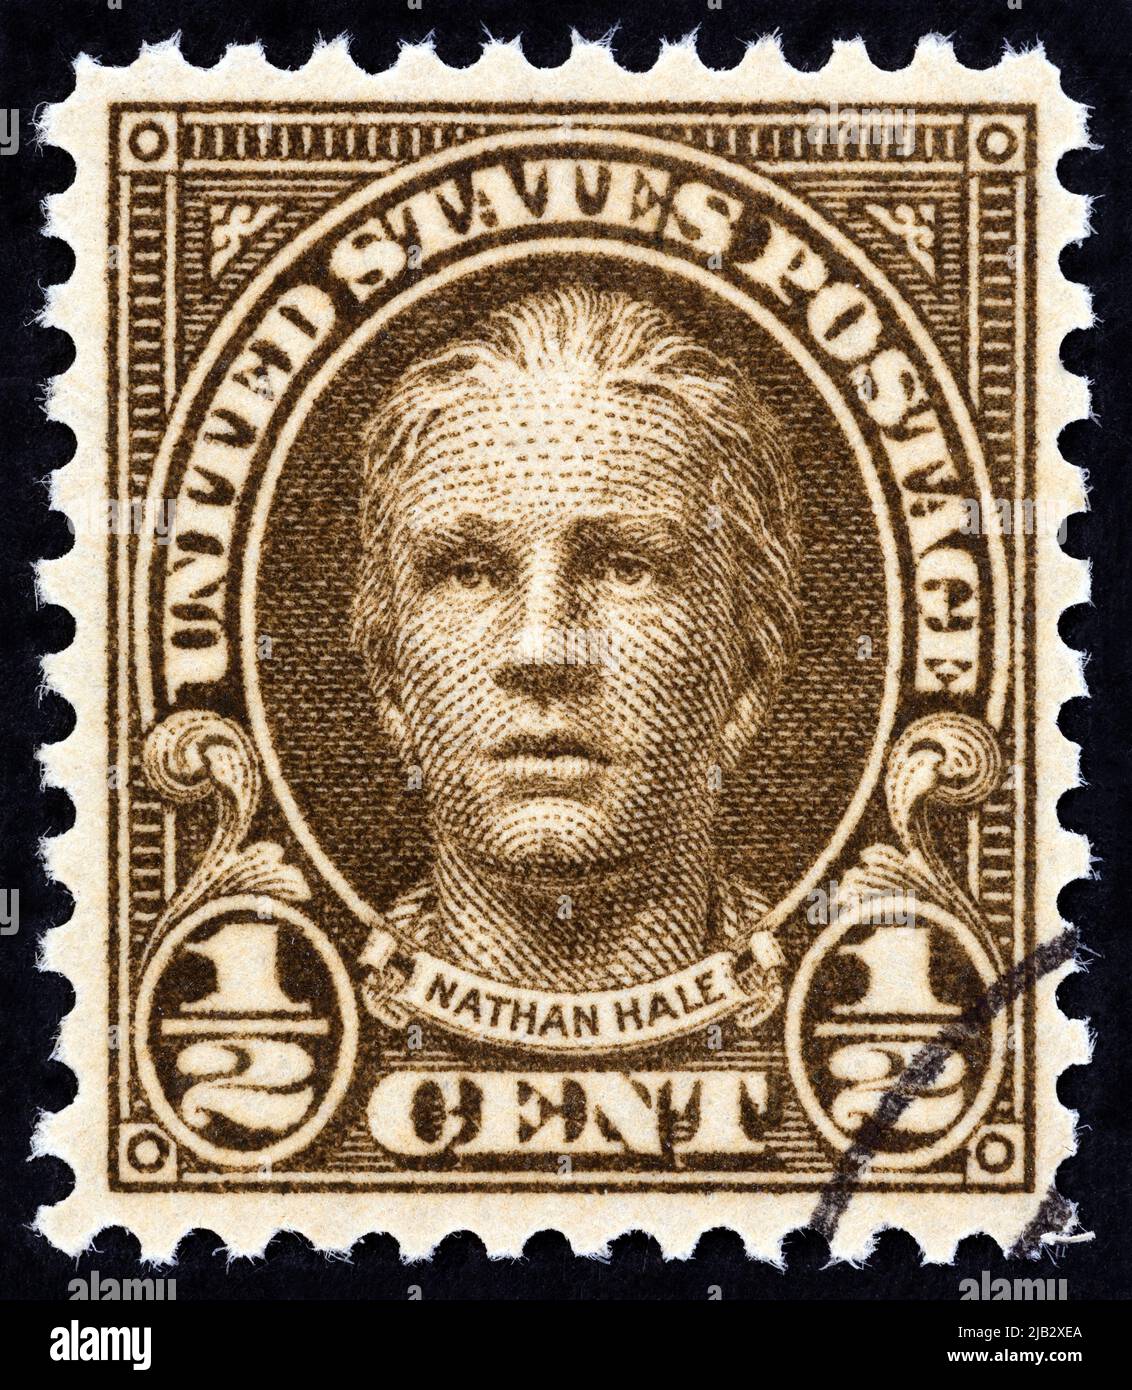 USA - CIRCA 1925: A stamp printed in USA shows Nathan Hale, circa 1925. Stock Photo